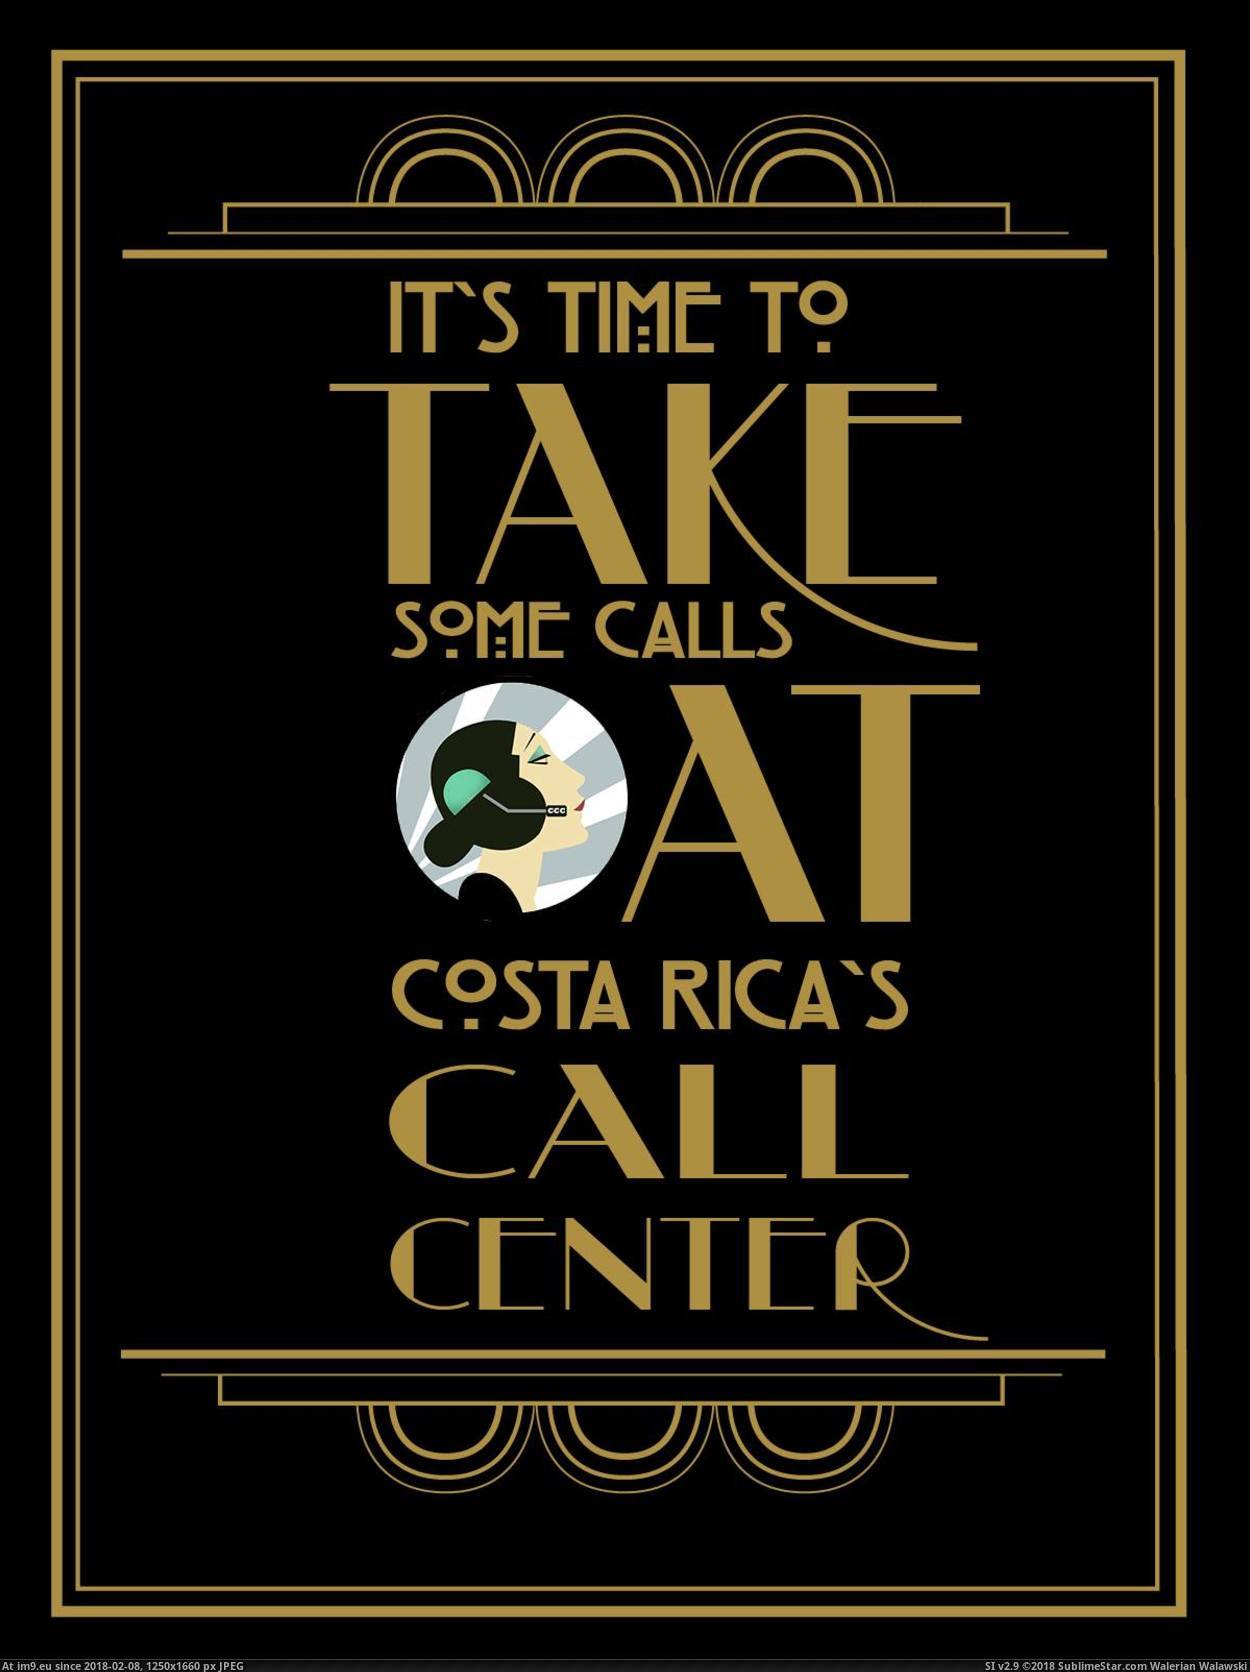 LATIN AMERICA CALL CENTER COSTA RICA WORK (in COSTA RICA'S CALL CENTER TEN YEAR ANNIVERSARY)